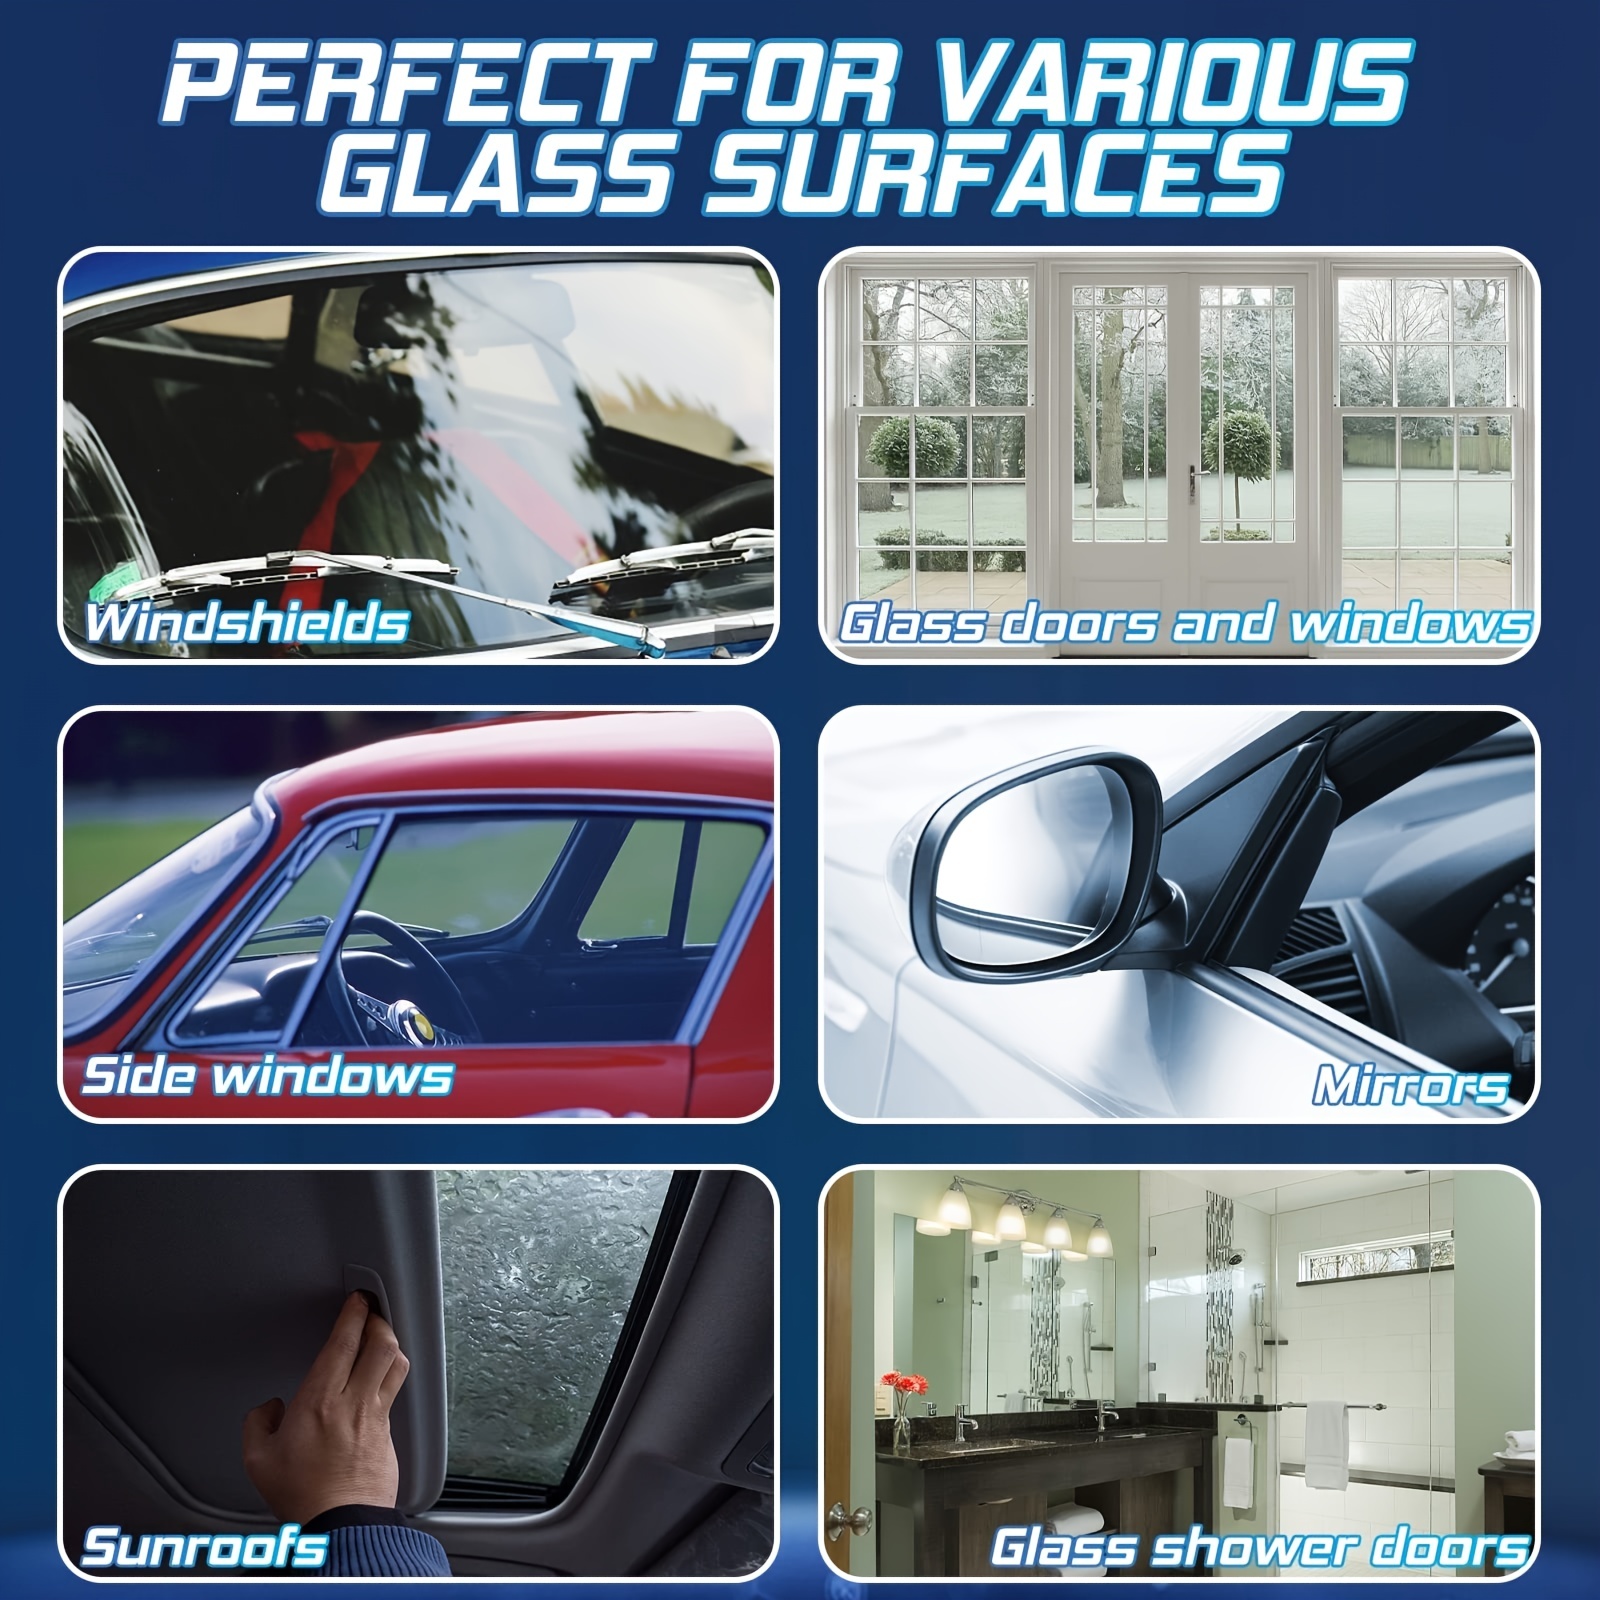 Car Glass Oil Film Remover Windshield Cleaner Waterproof - Temu